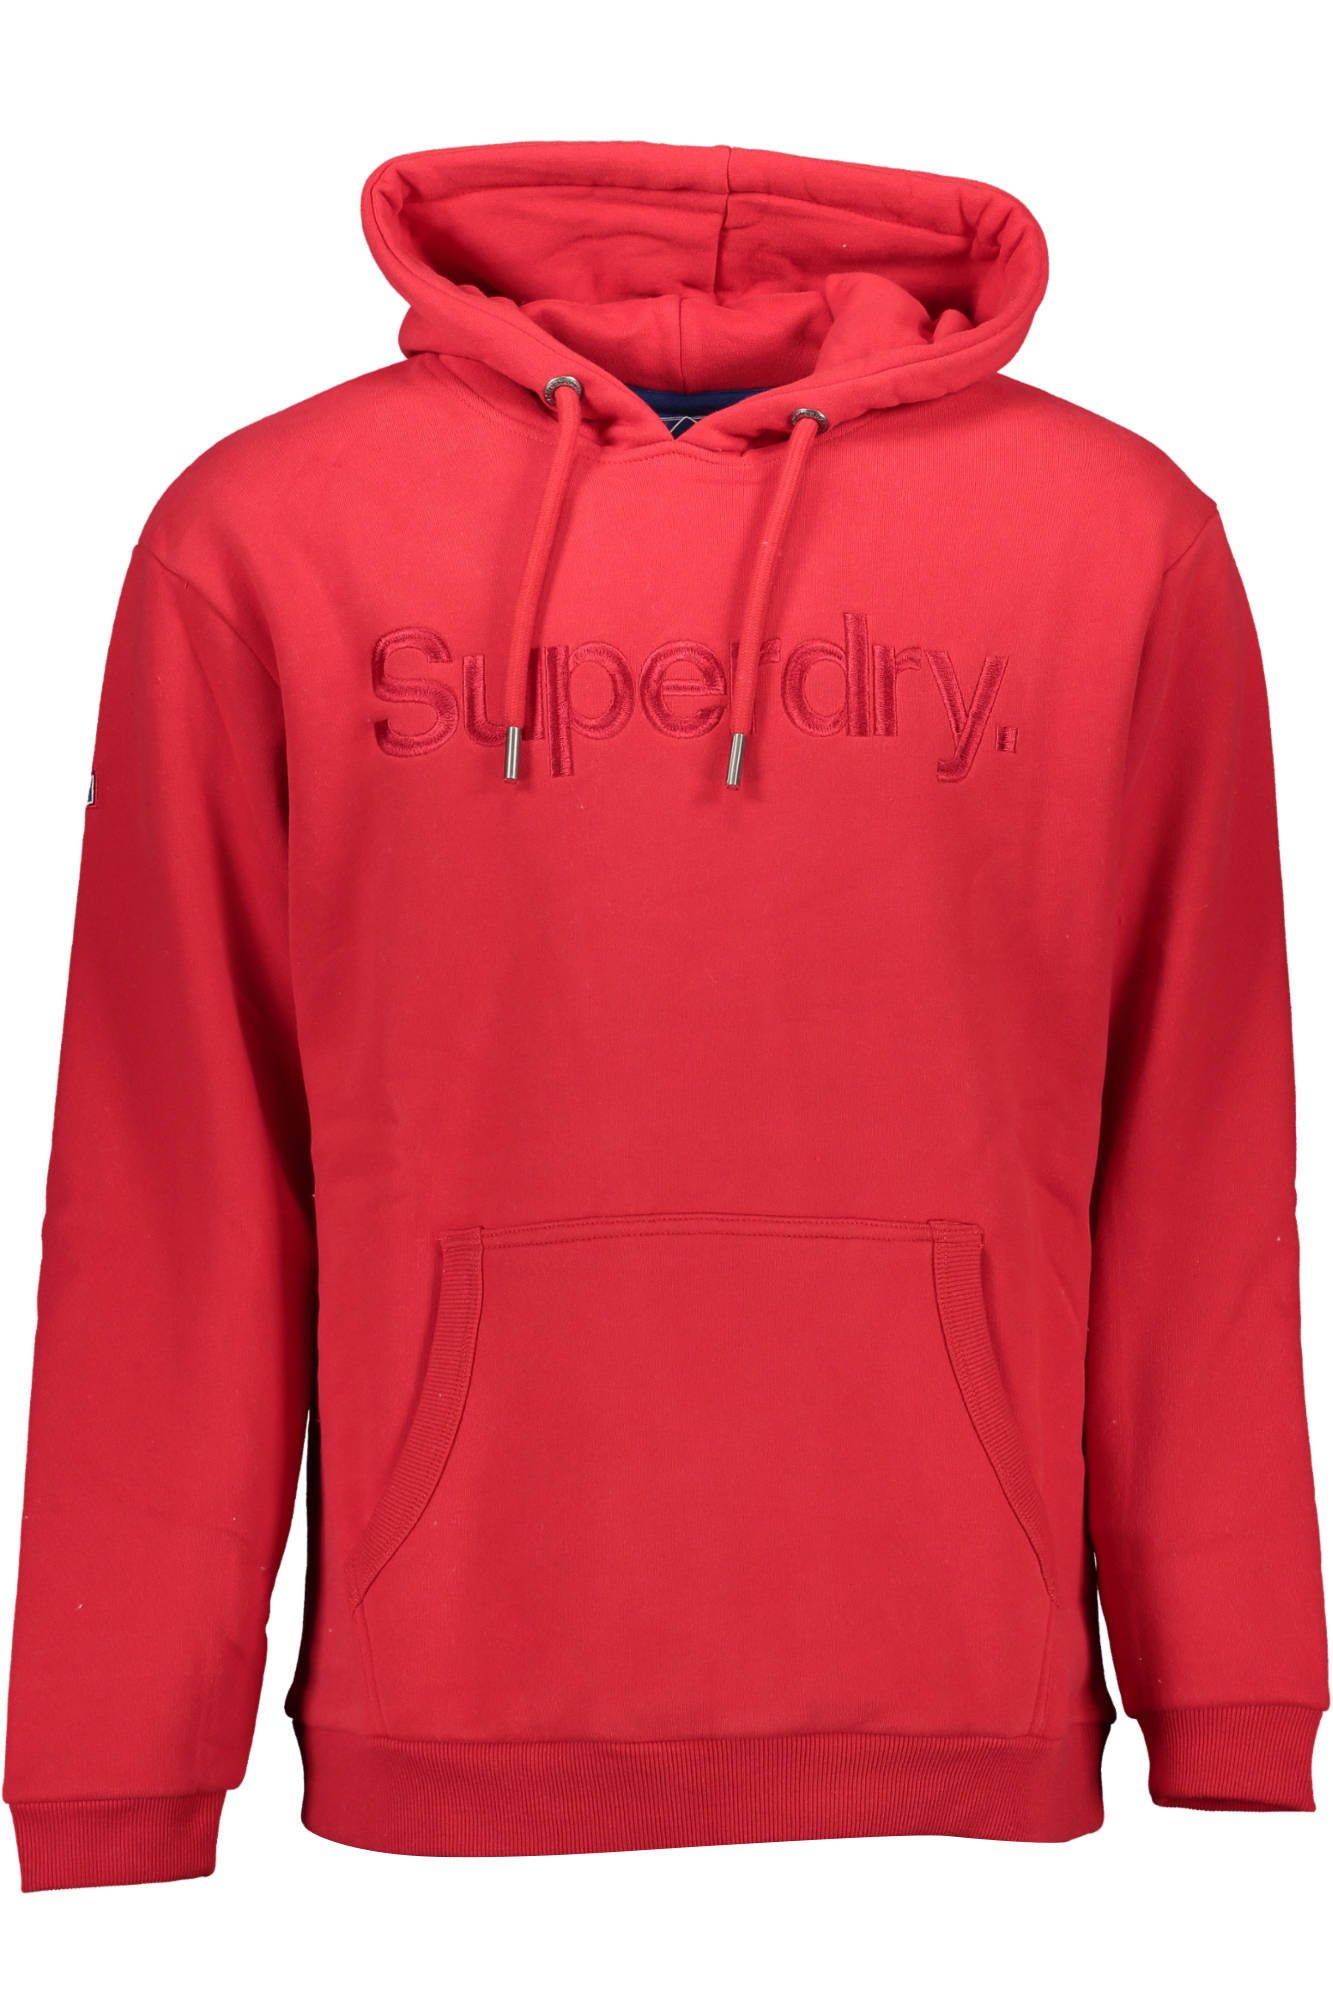 Superdry Red Sweater - Fizigo